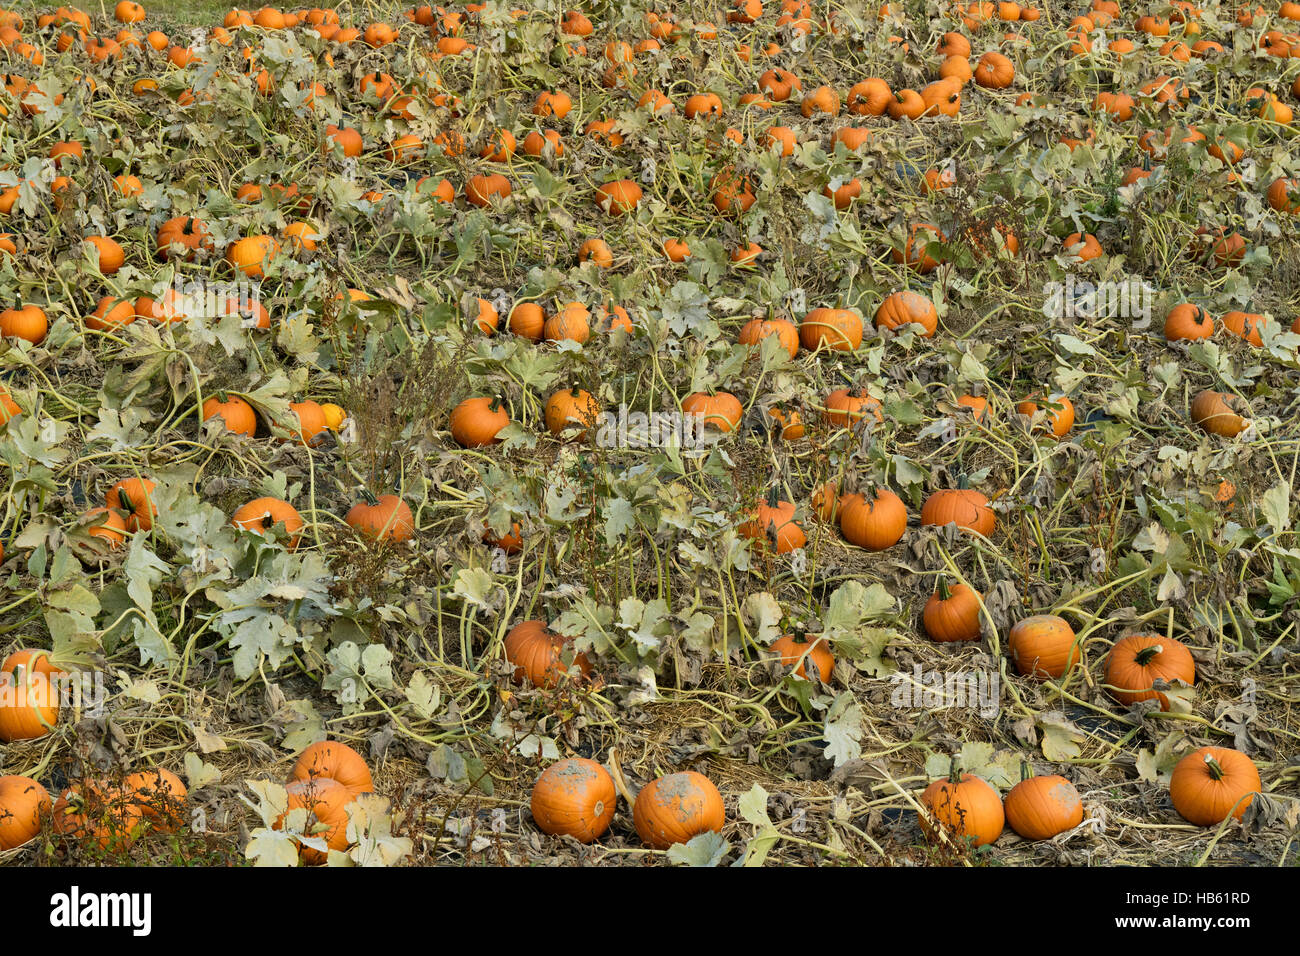 Field with orange pumpkins Stock Photo